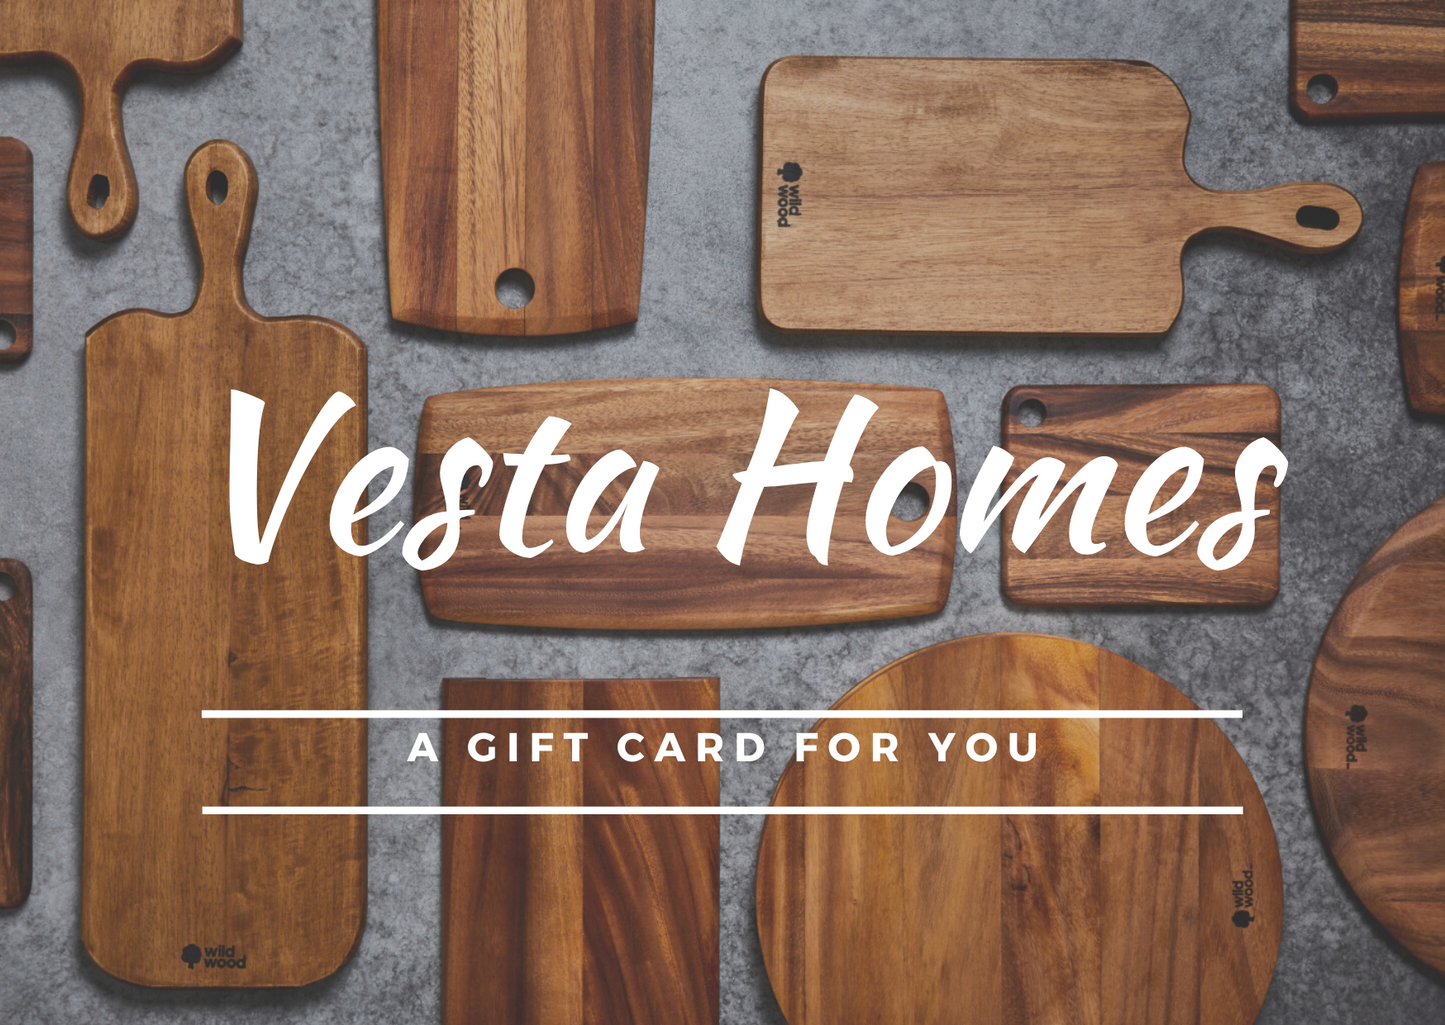 Vesta Homes Gift Card